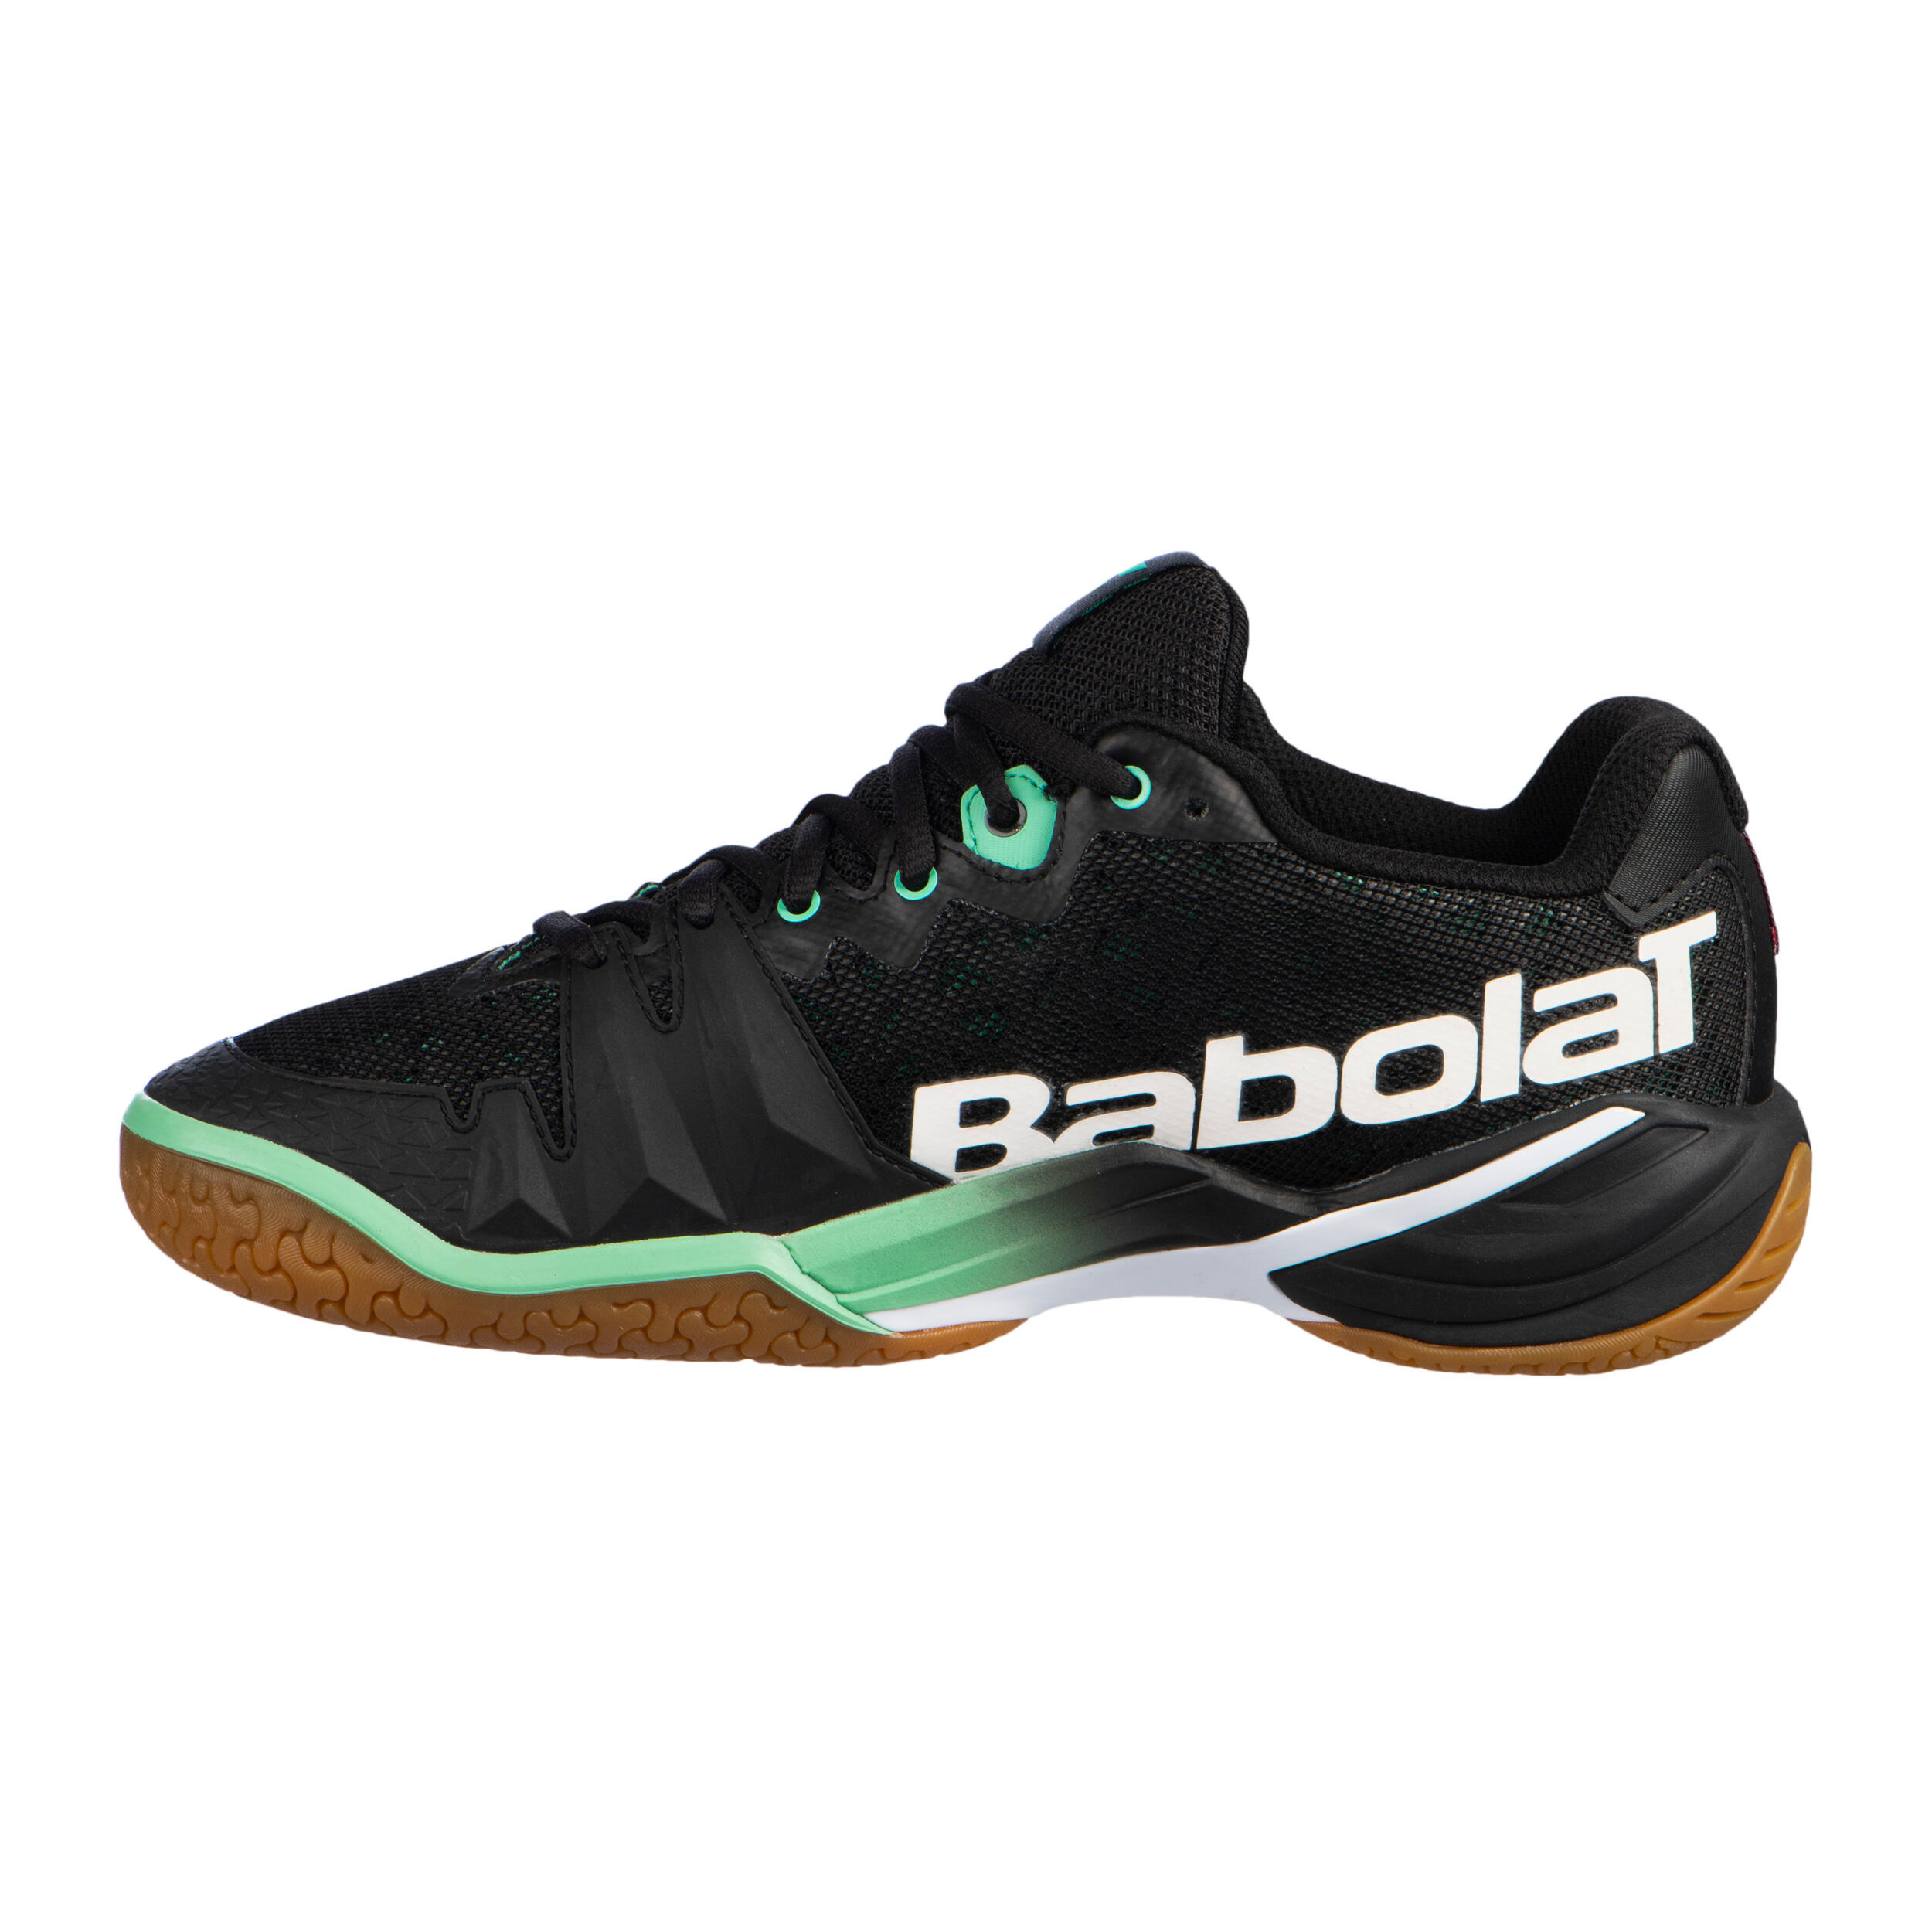 Badminton, Squash, Indoor Sports Shoes Shadow Tour - Black/Green 3/6